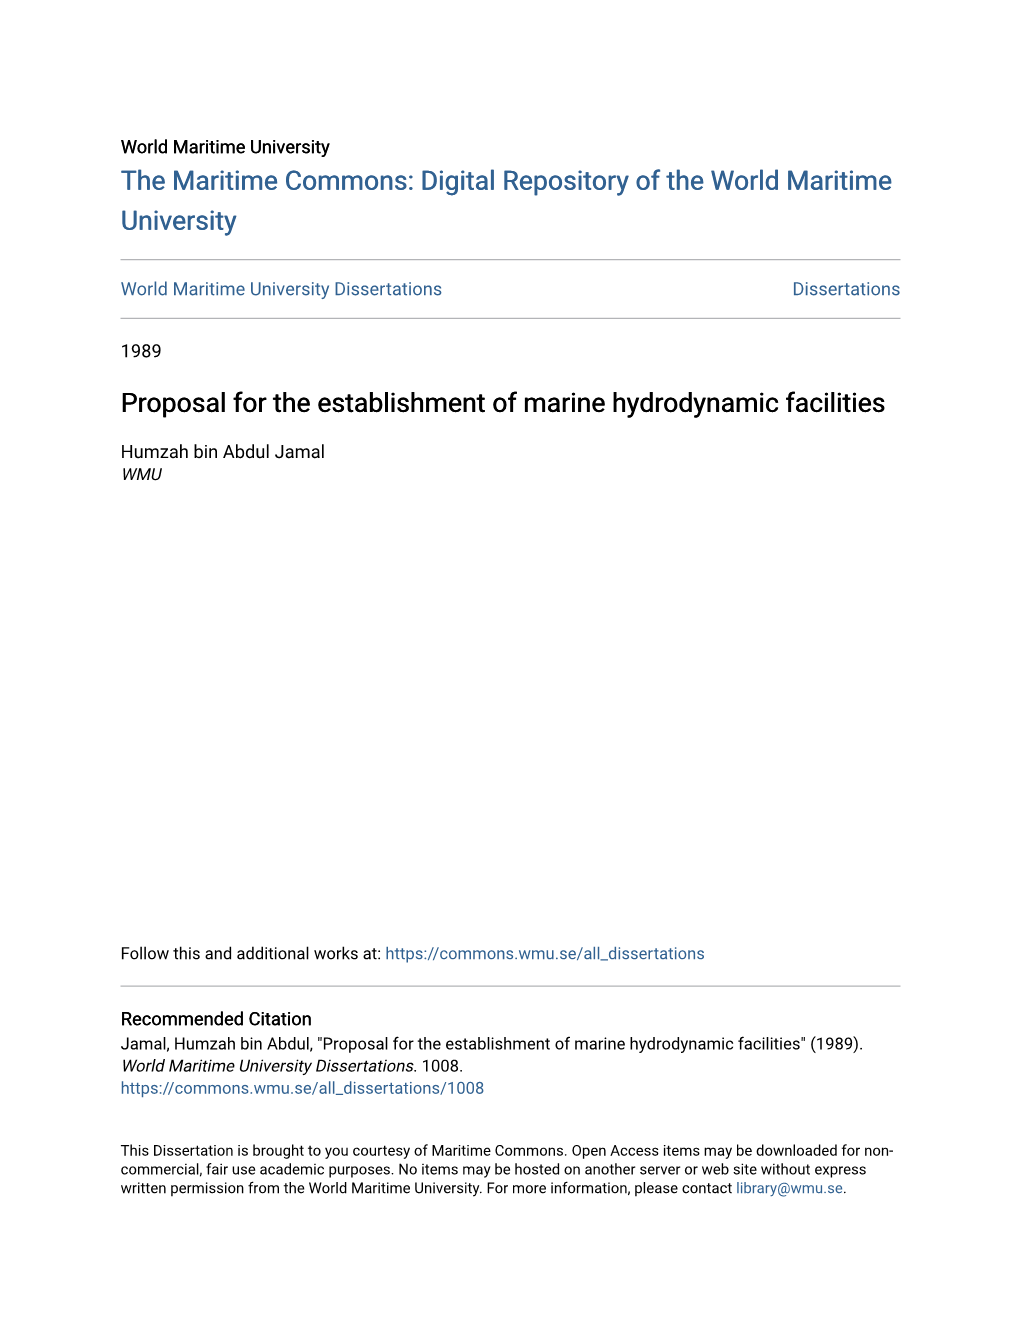 Proposal for the Establishment of Marine Hydrodynamic Facilities